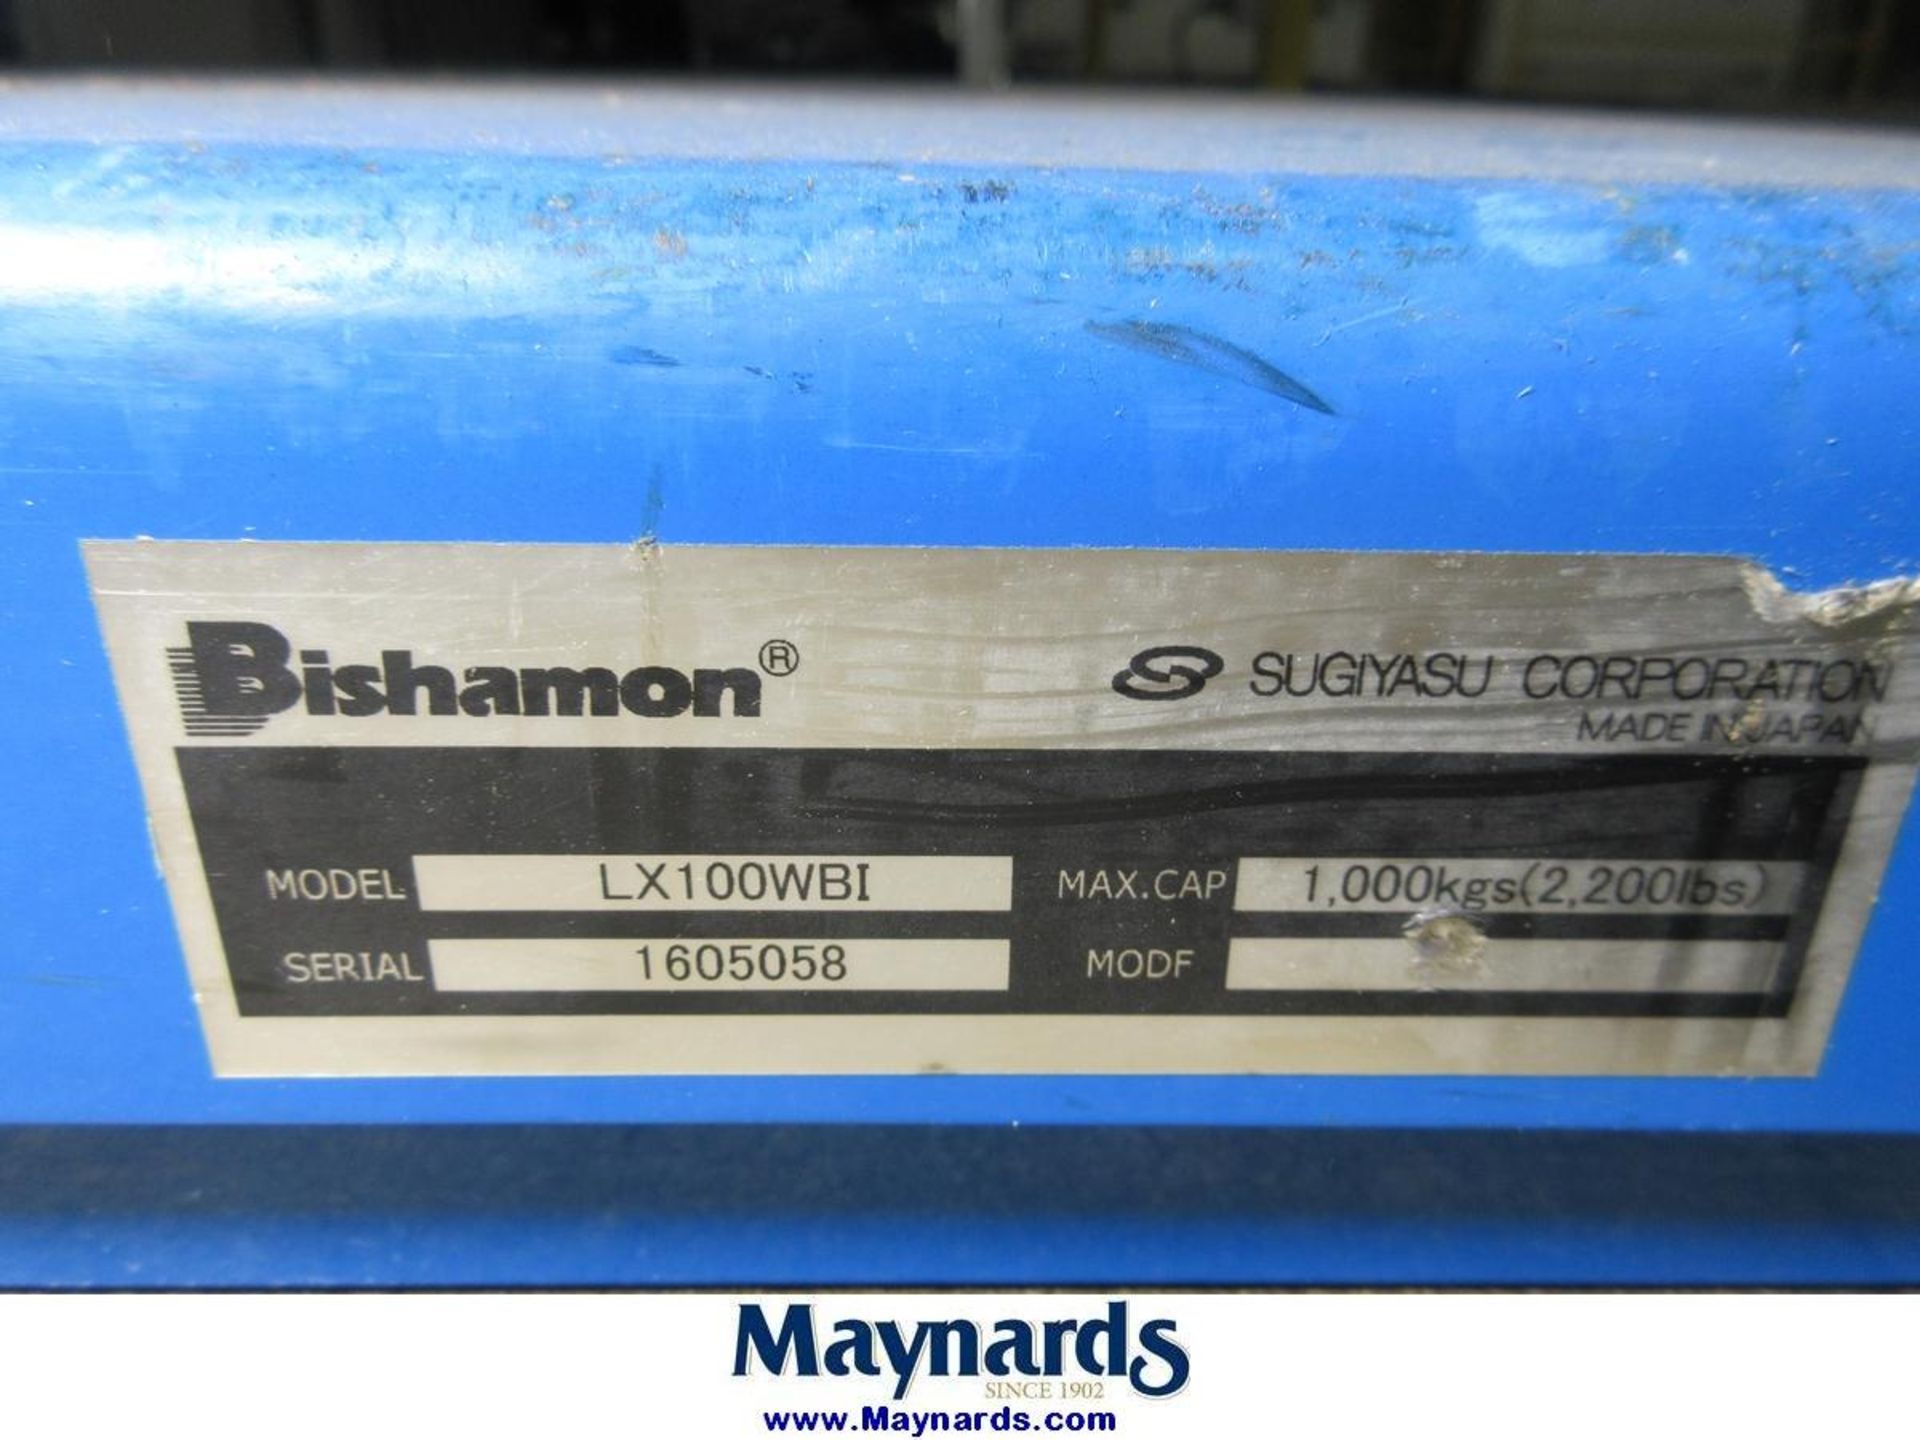 Bishamon LX100WBI 2200-Lb. 51"x34-1/2" Scissor Lift Table - Image 5 of 5